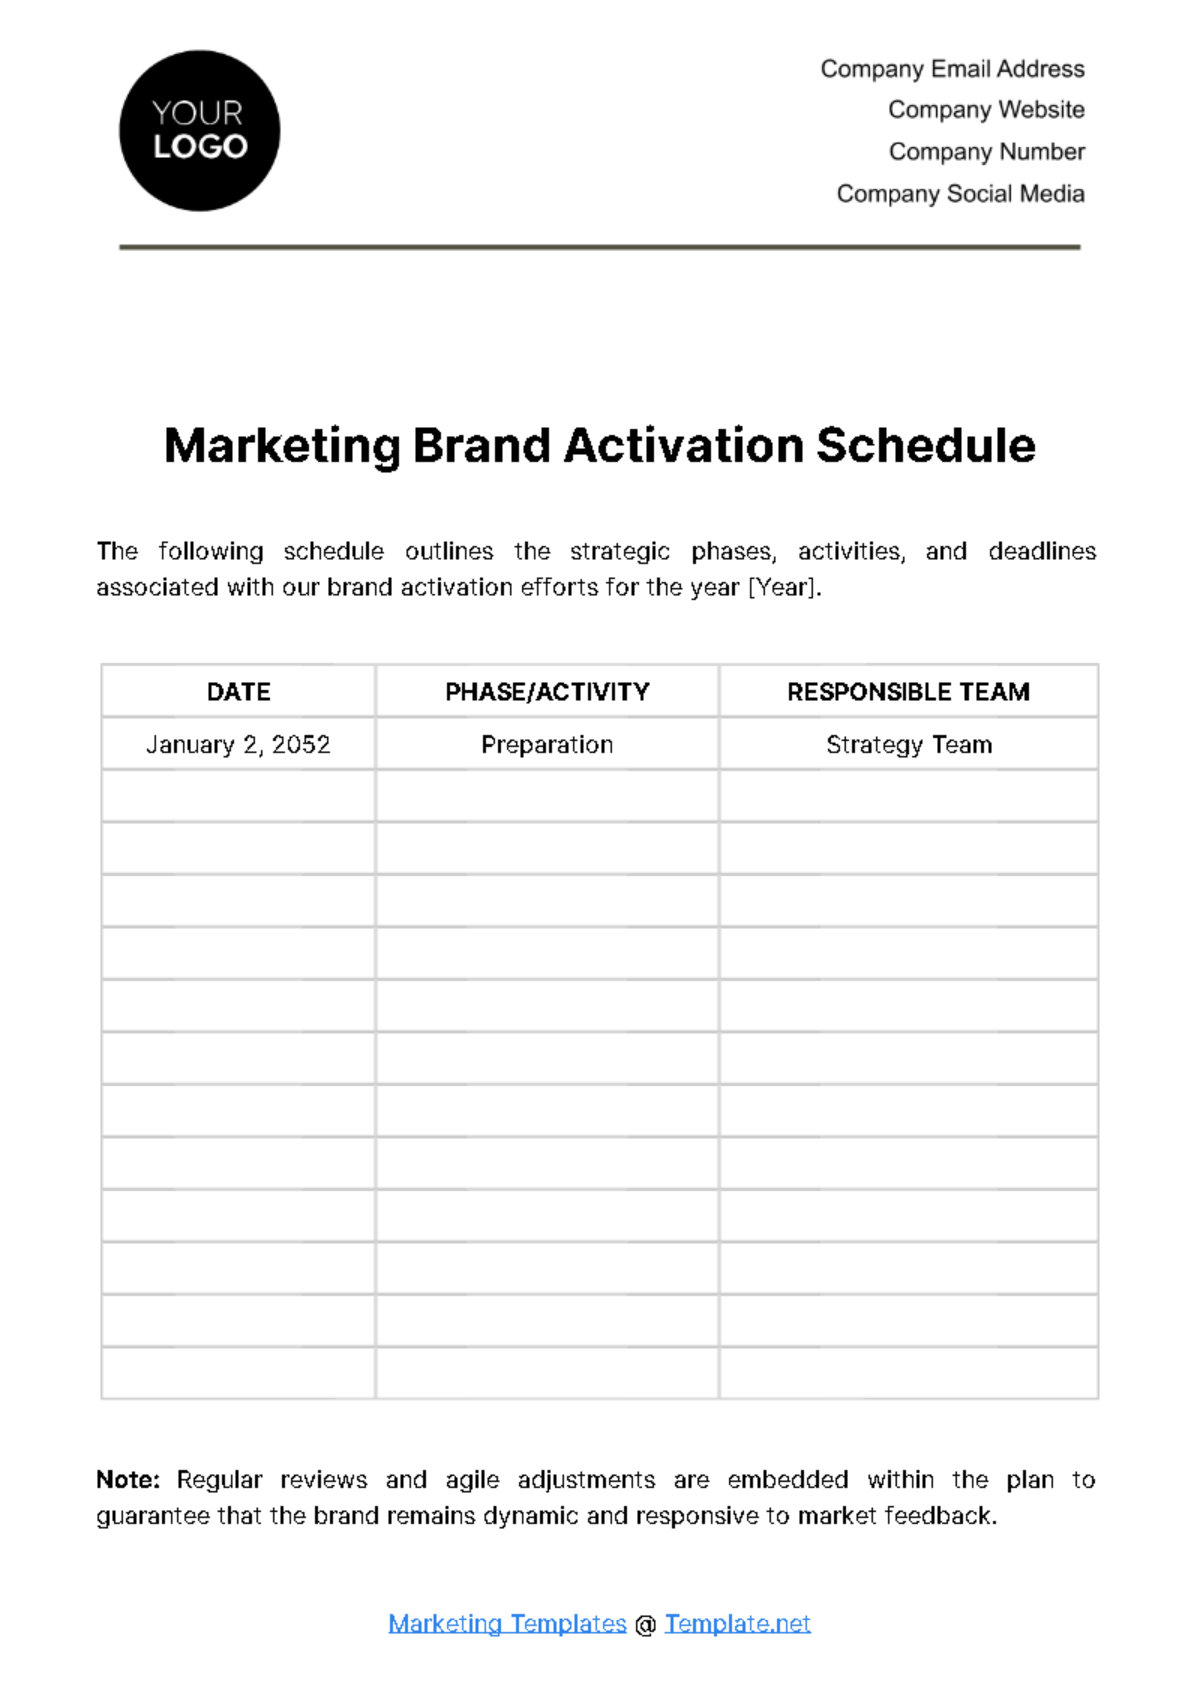 Marketing Brand Activation Schedule Template